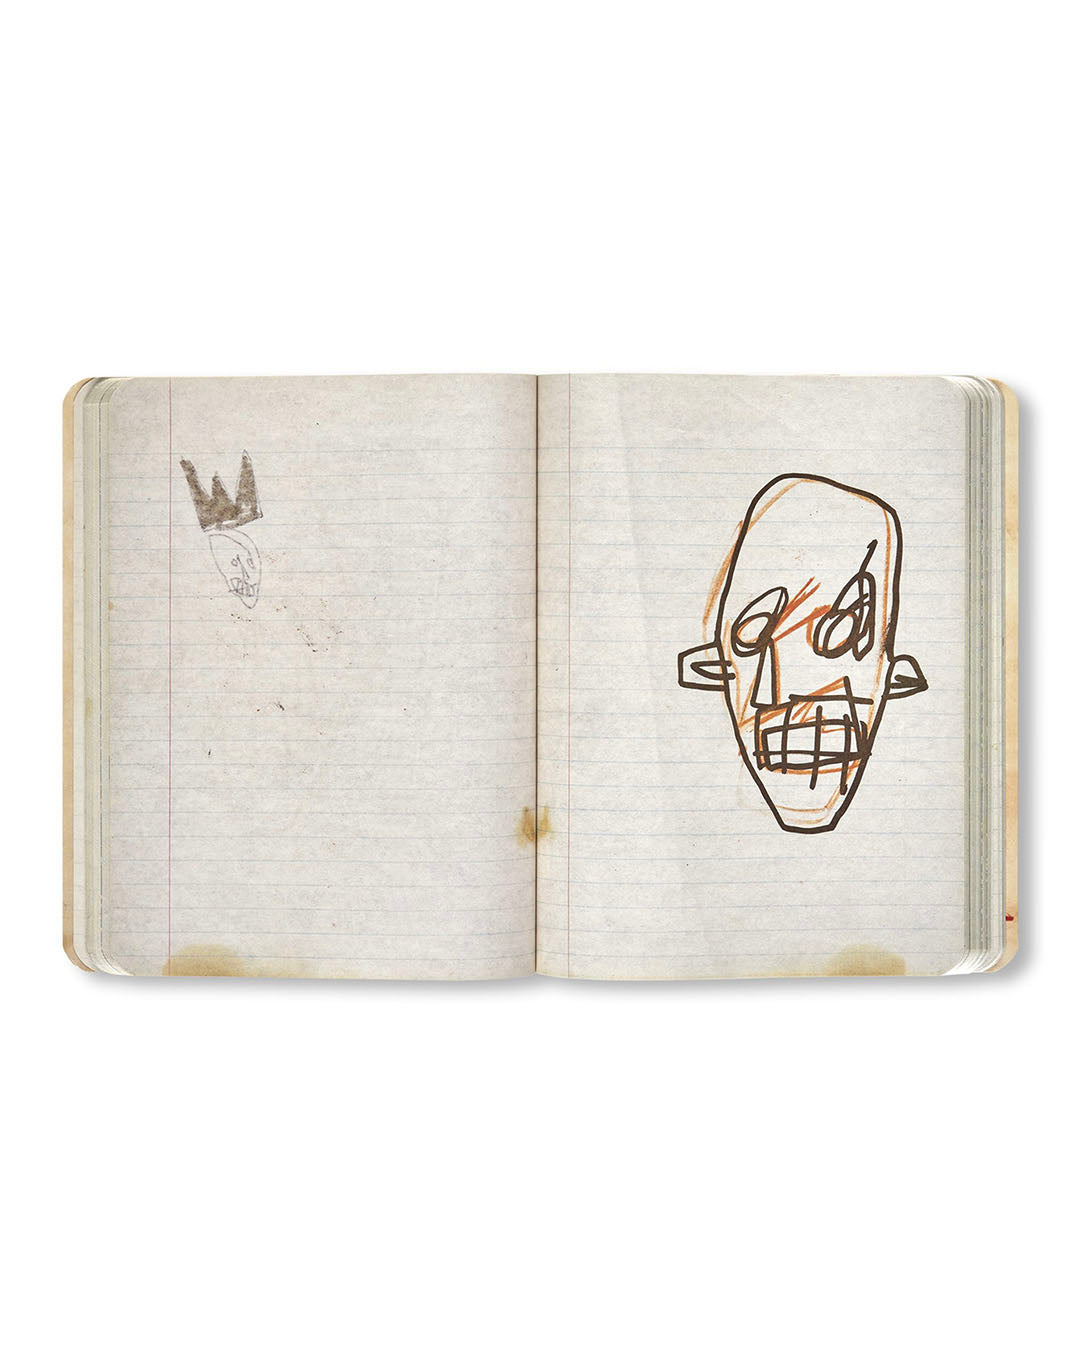 【JEAN-MICHEL BASQUIAT】 THE NOTEBOOKS by Jean-Michel Basquiat